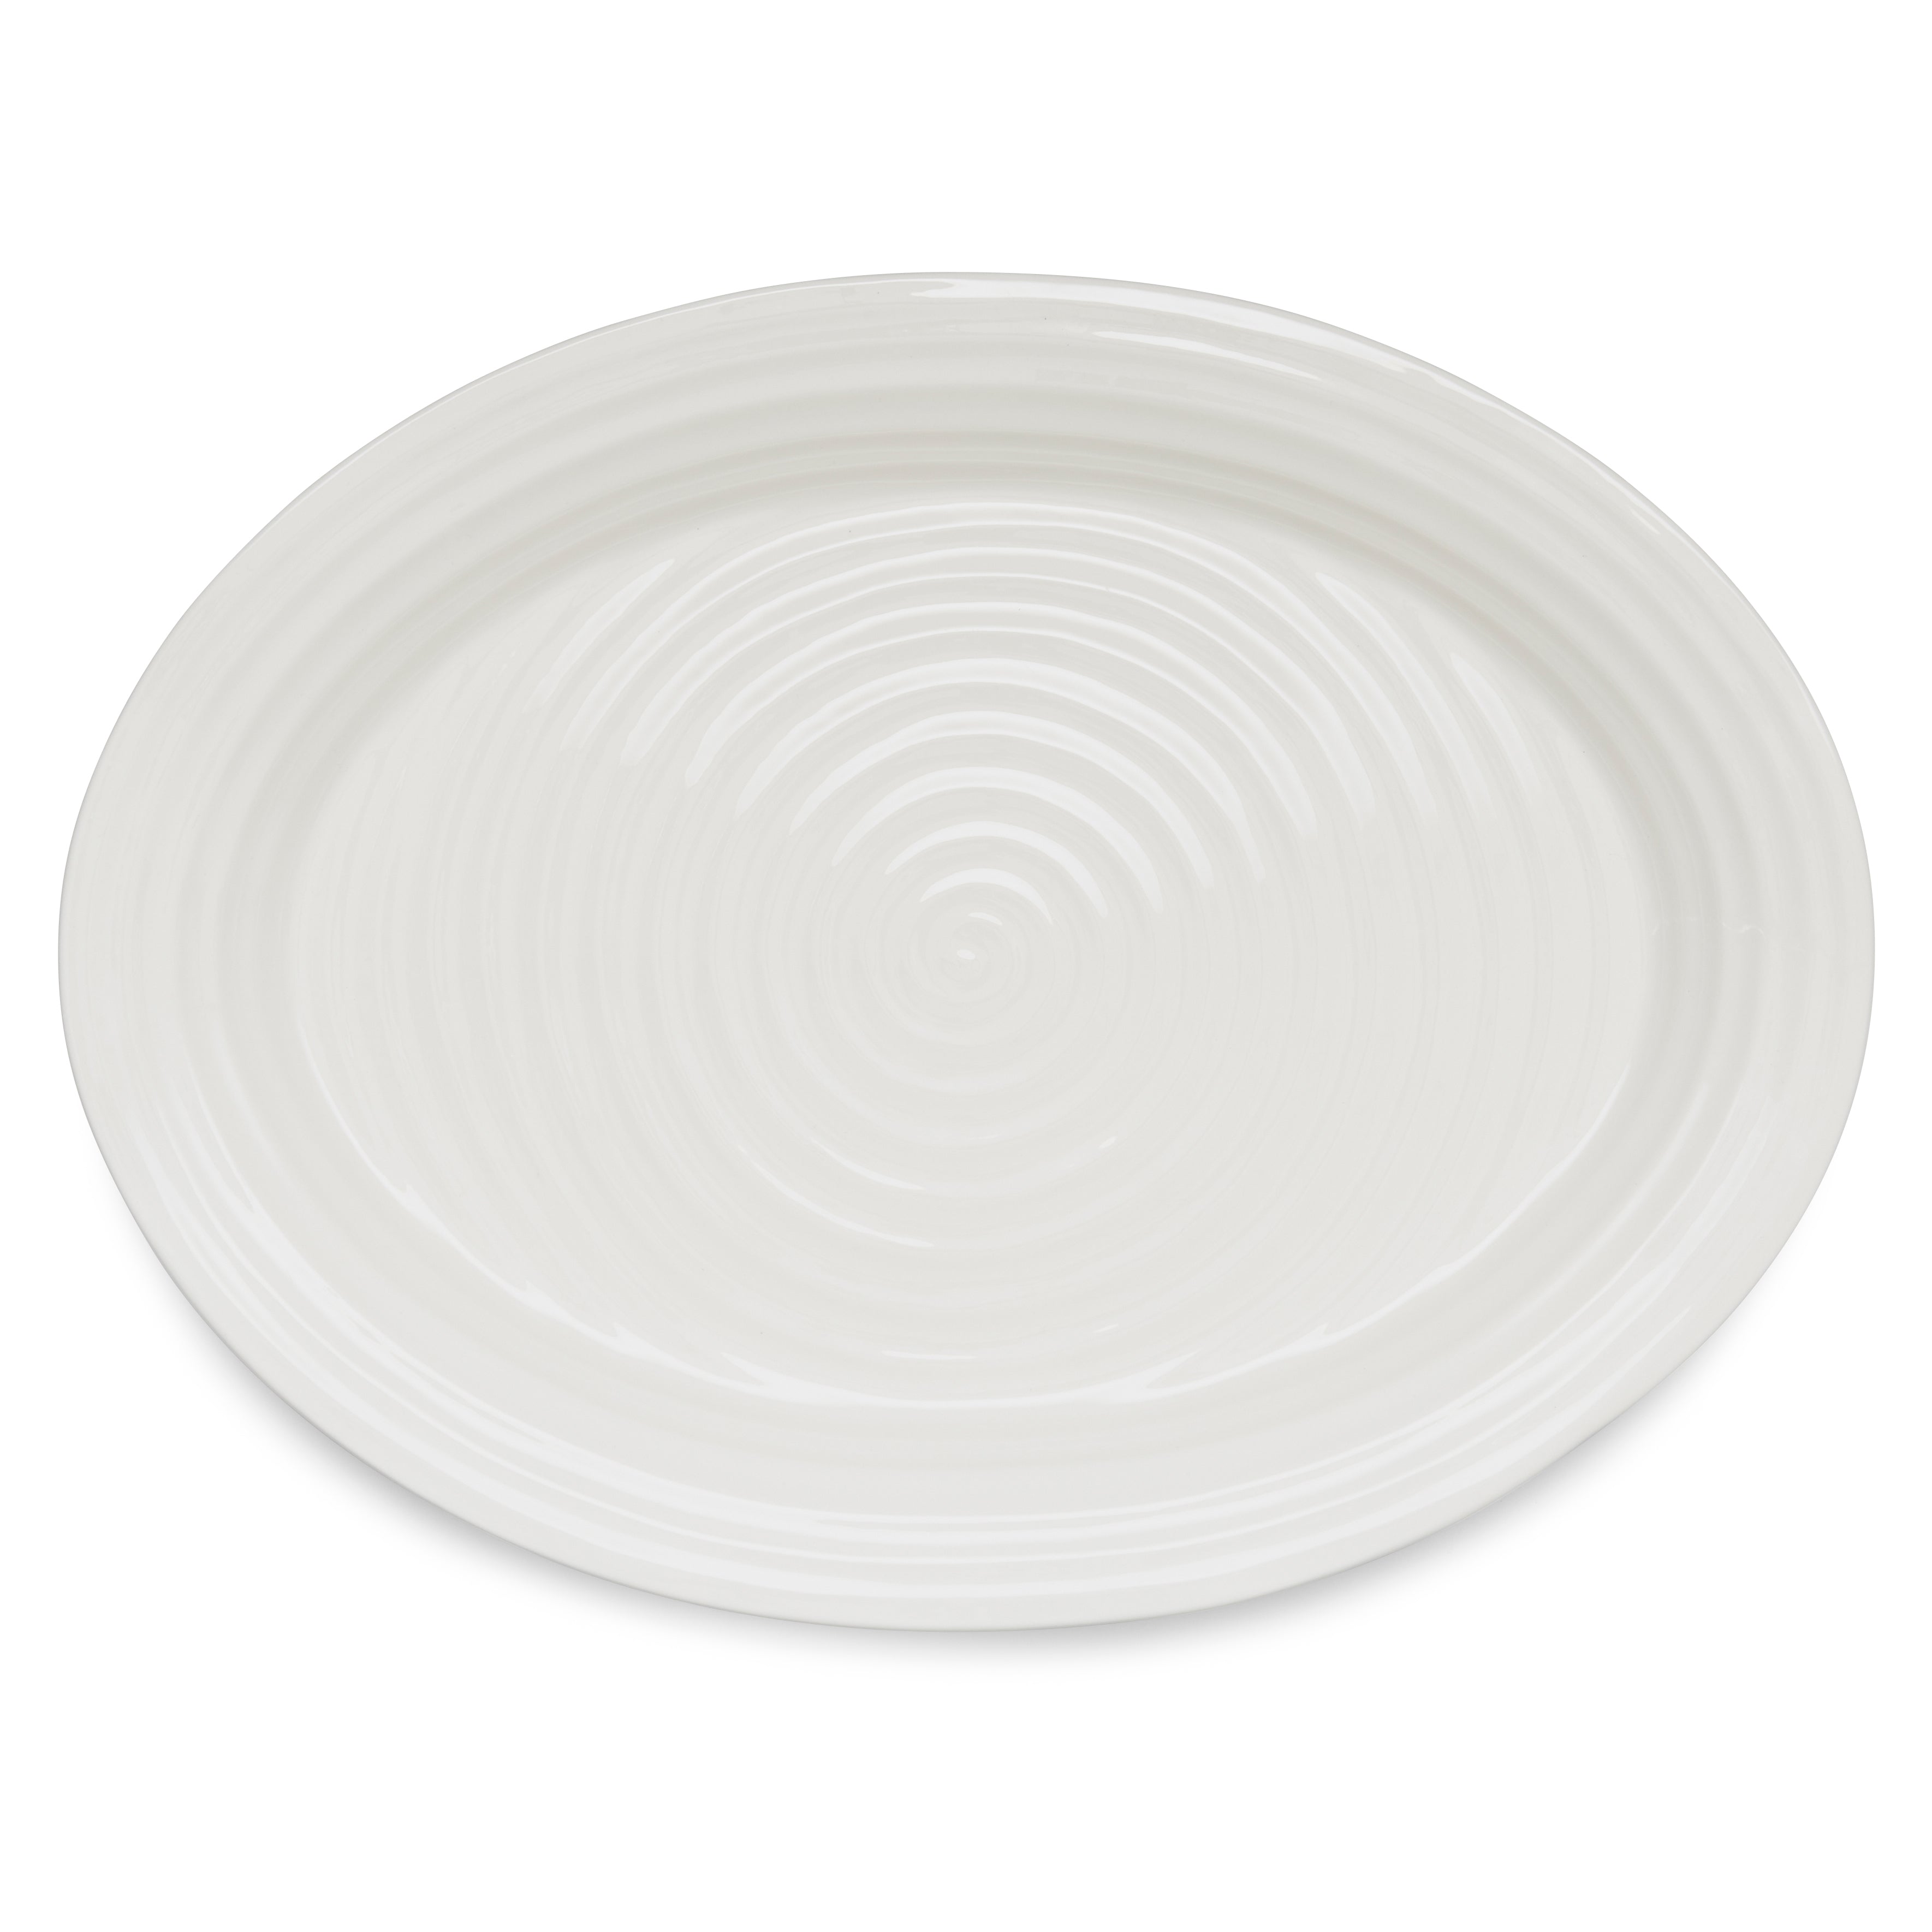 Sophie Conran White Large Oval Platter